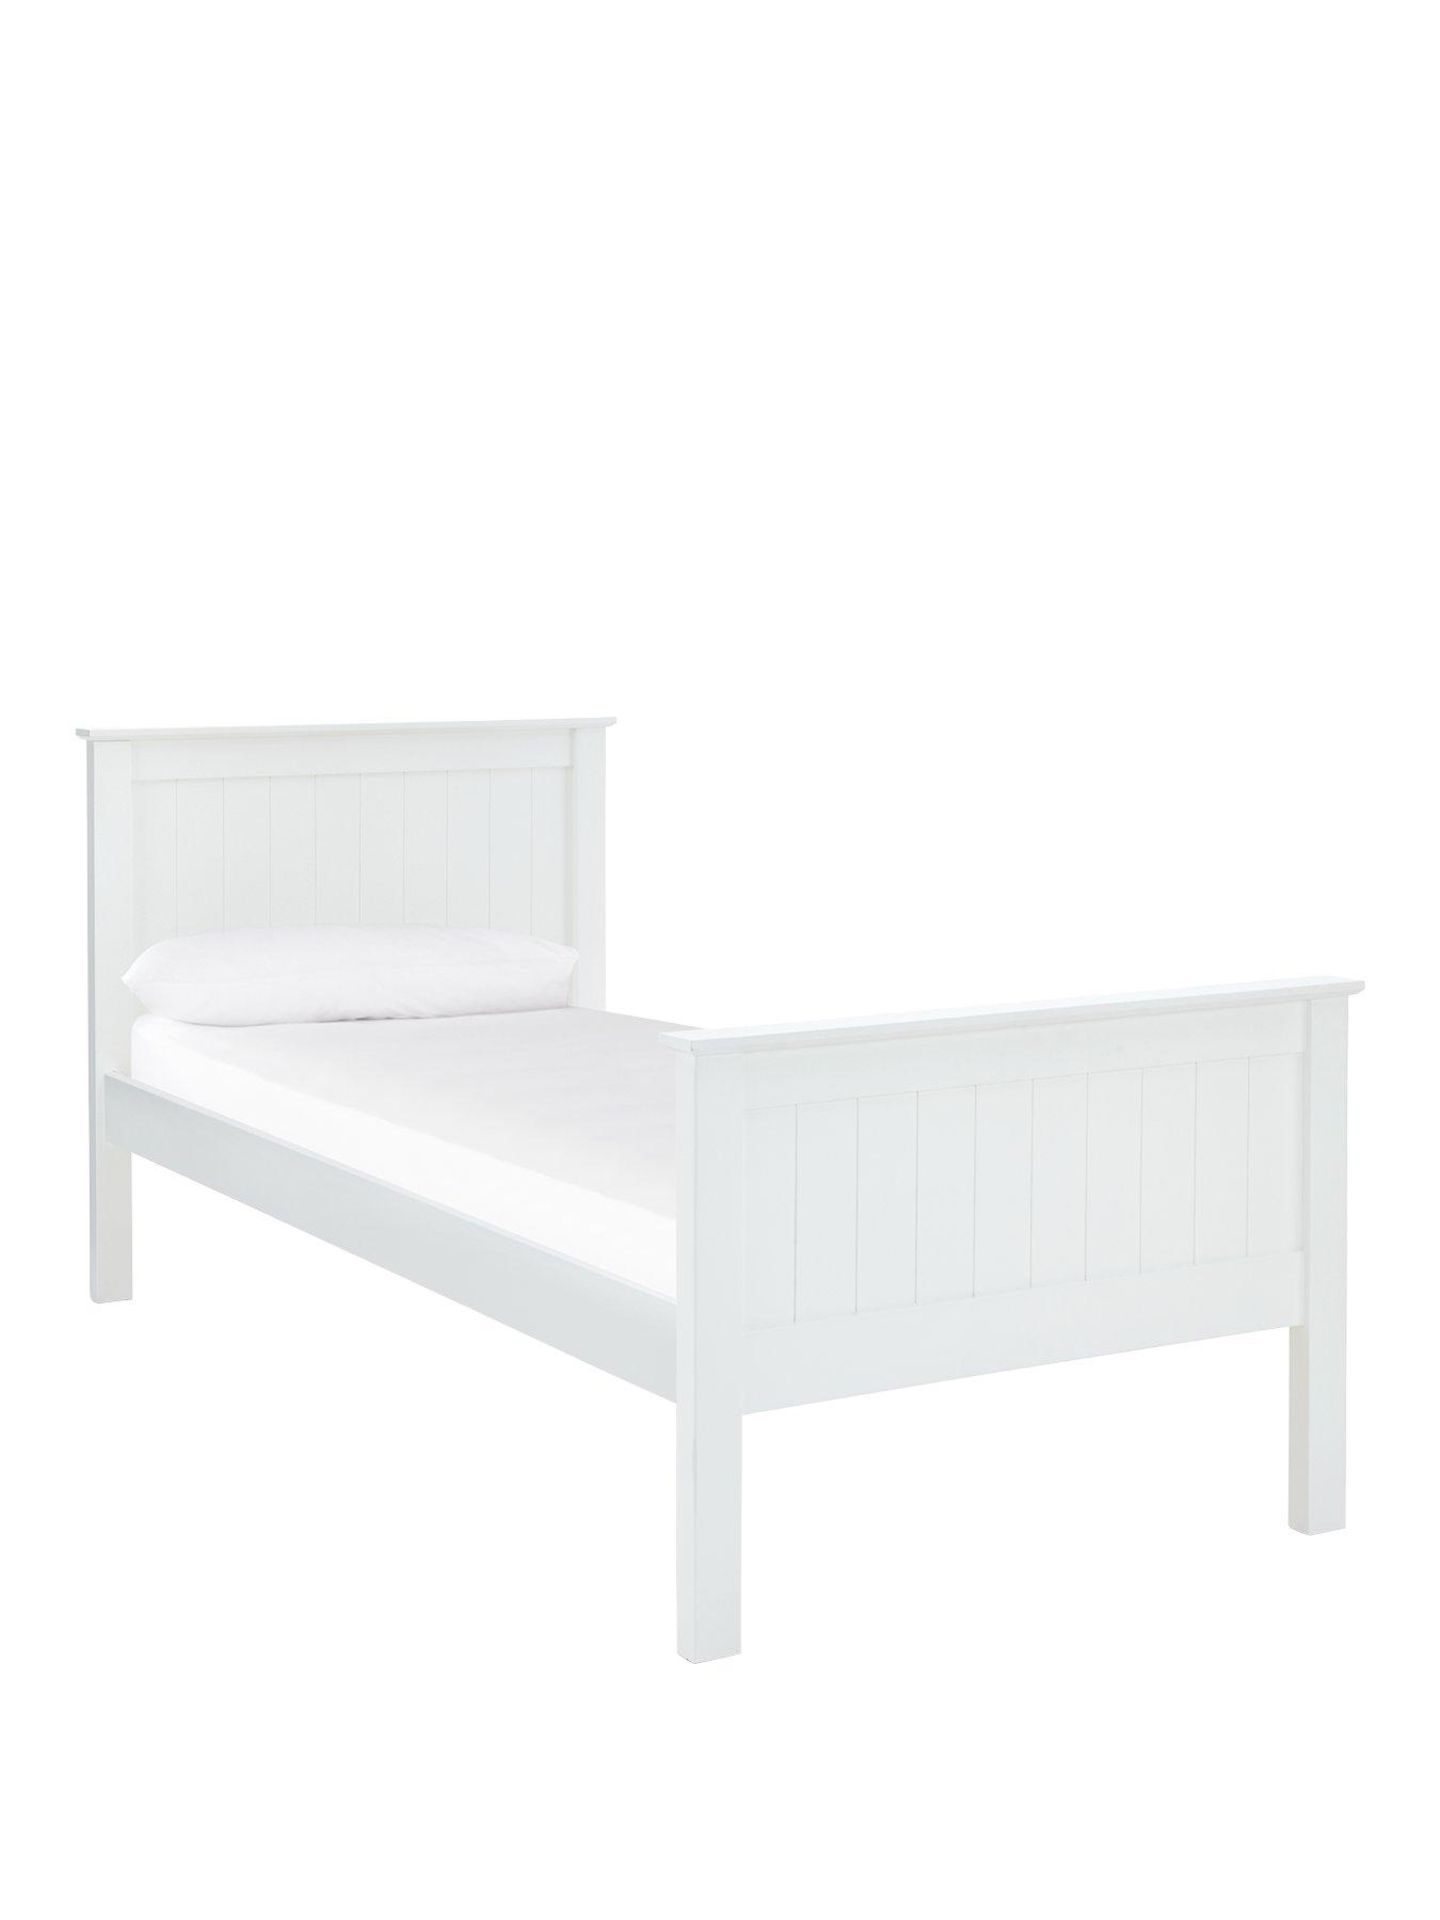 Boxed Item Silent Night Jupiter Single Bed [White] 98X103X201Cm rrp, £476.0